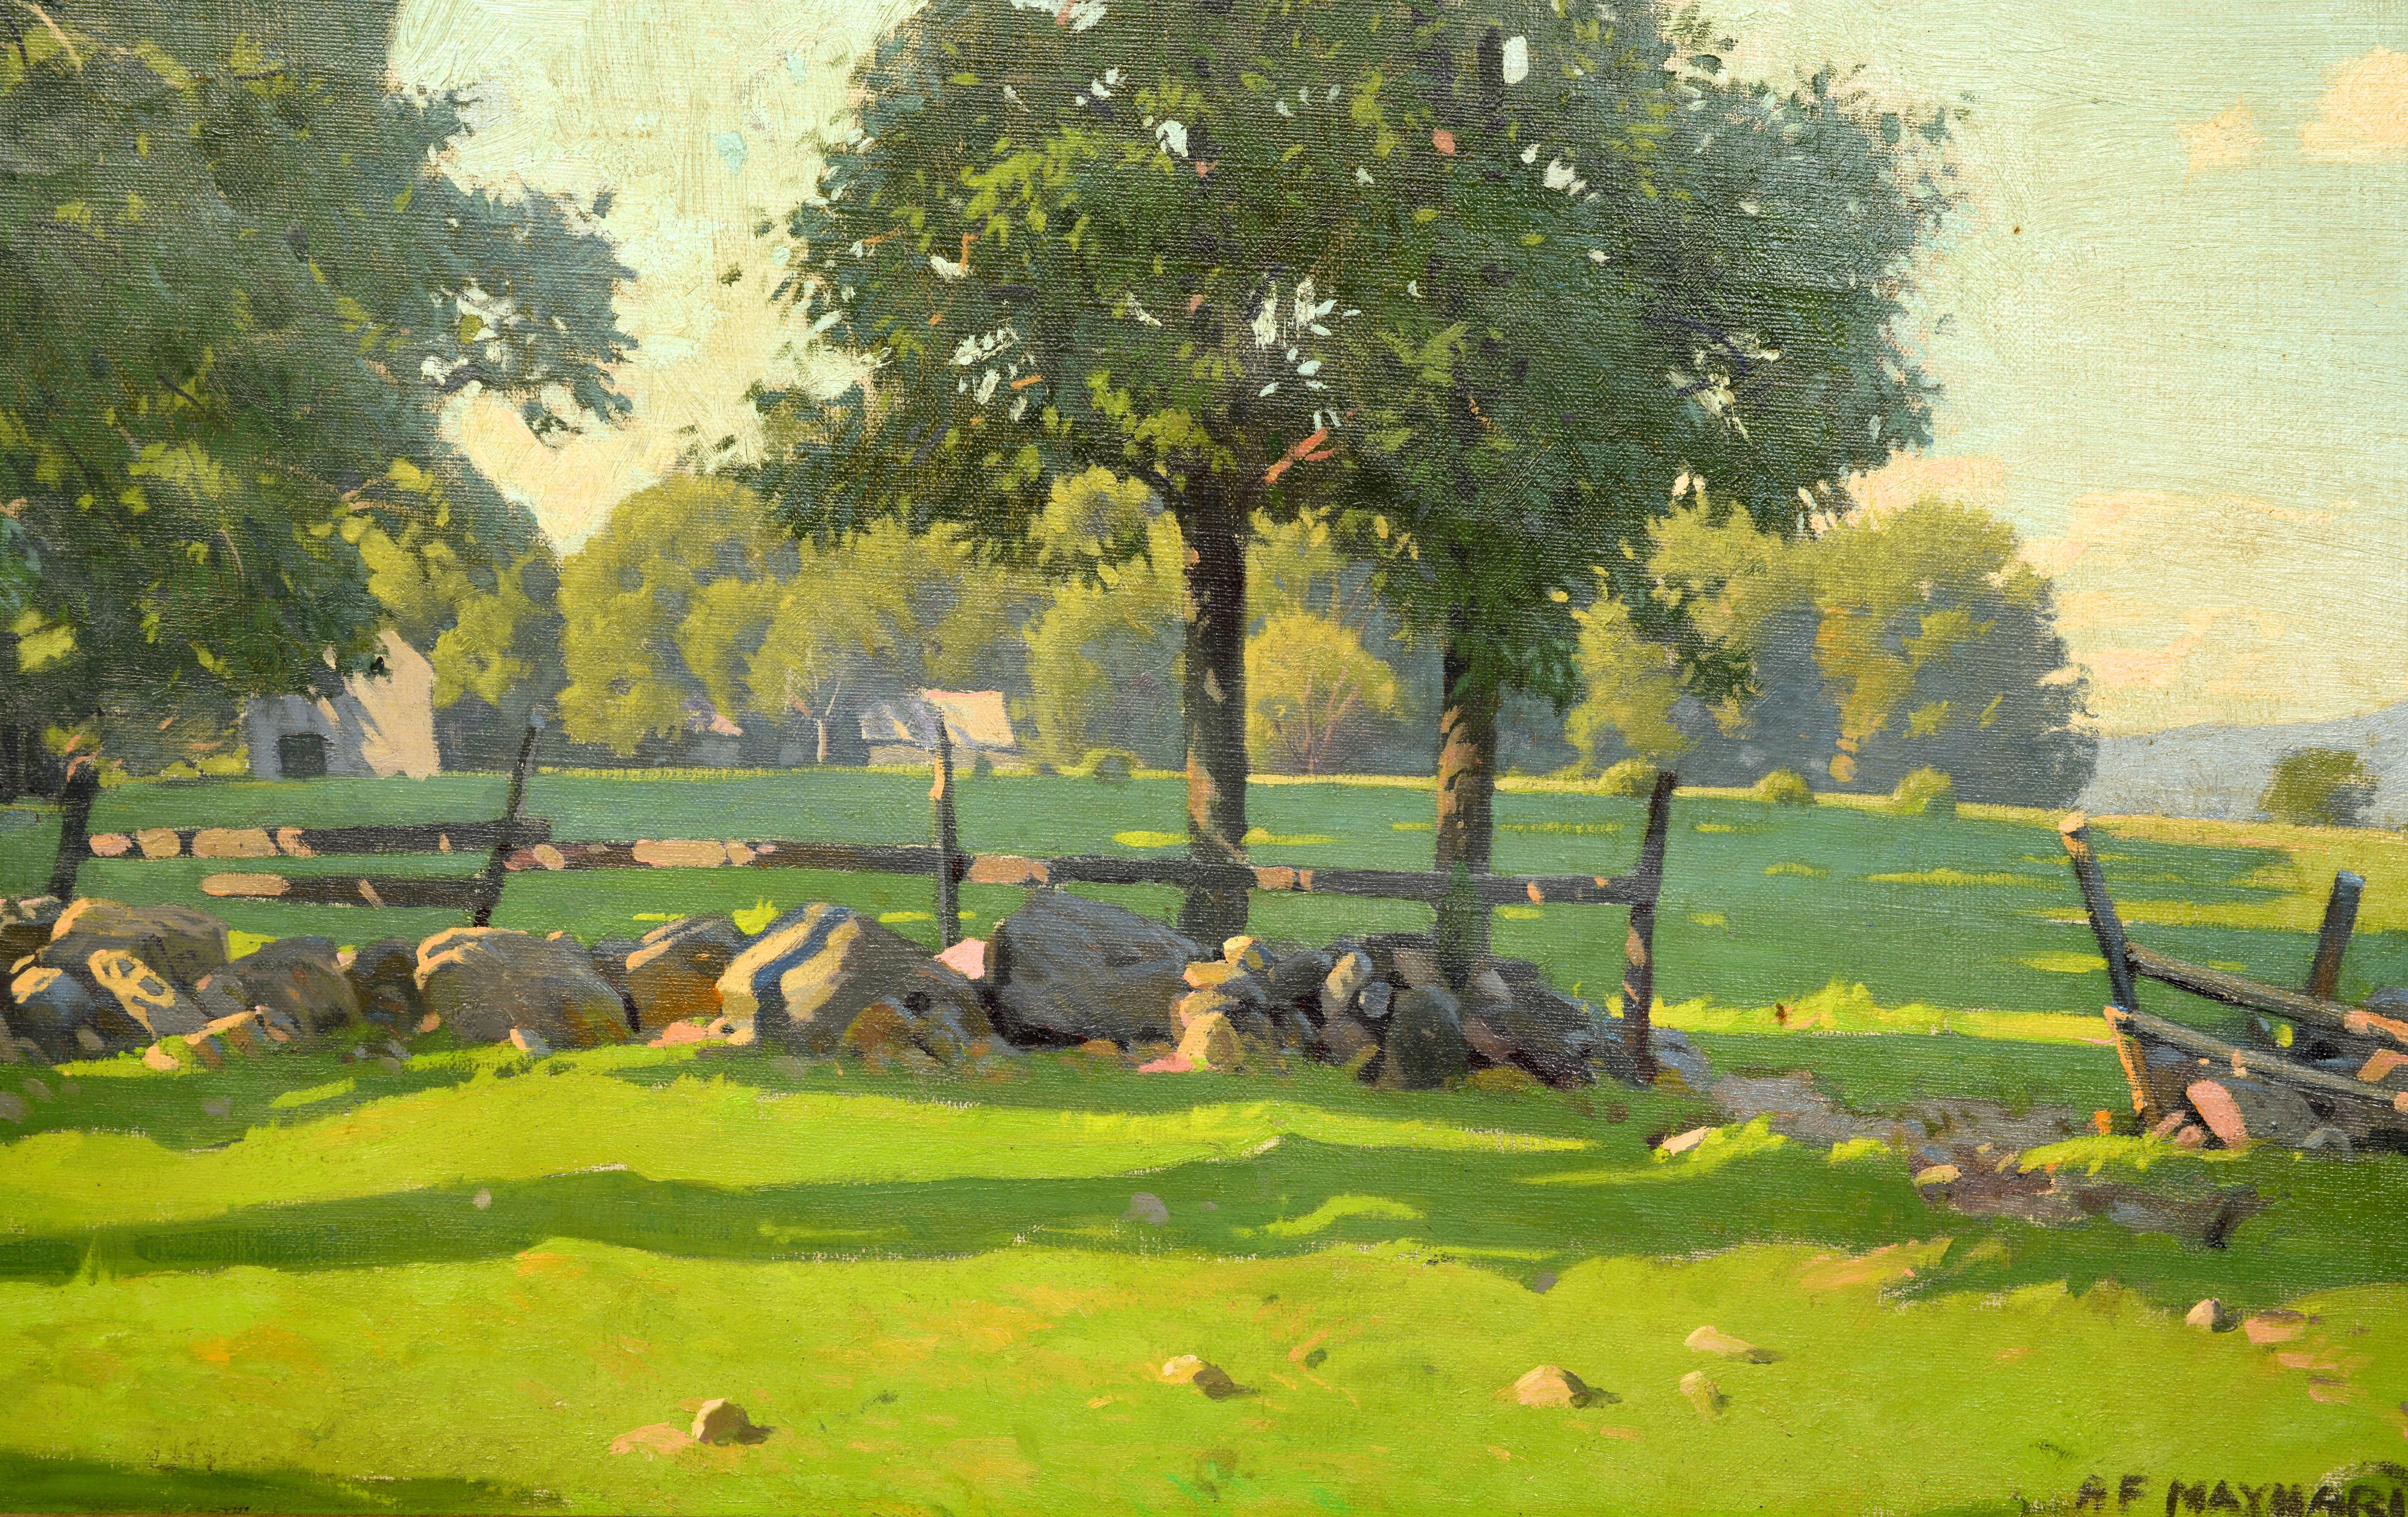 20th Century Arthur F. Maynard, Signed Oil on Canvas, a Rural Landscape